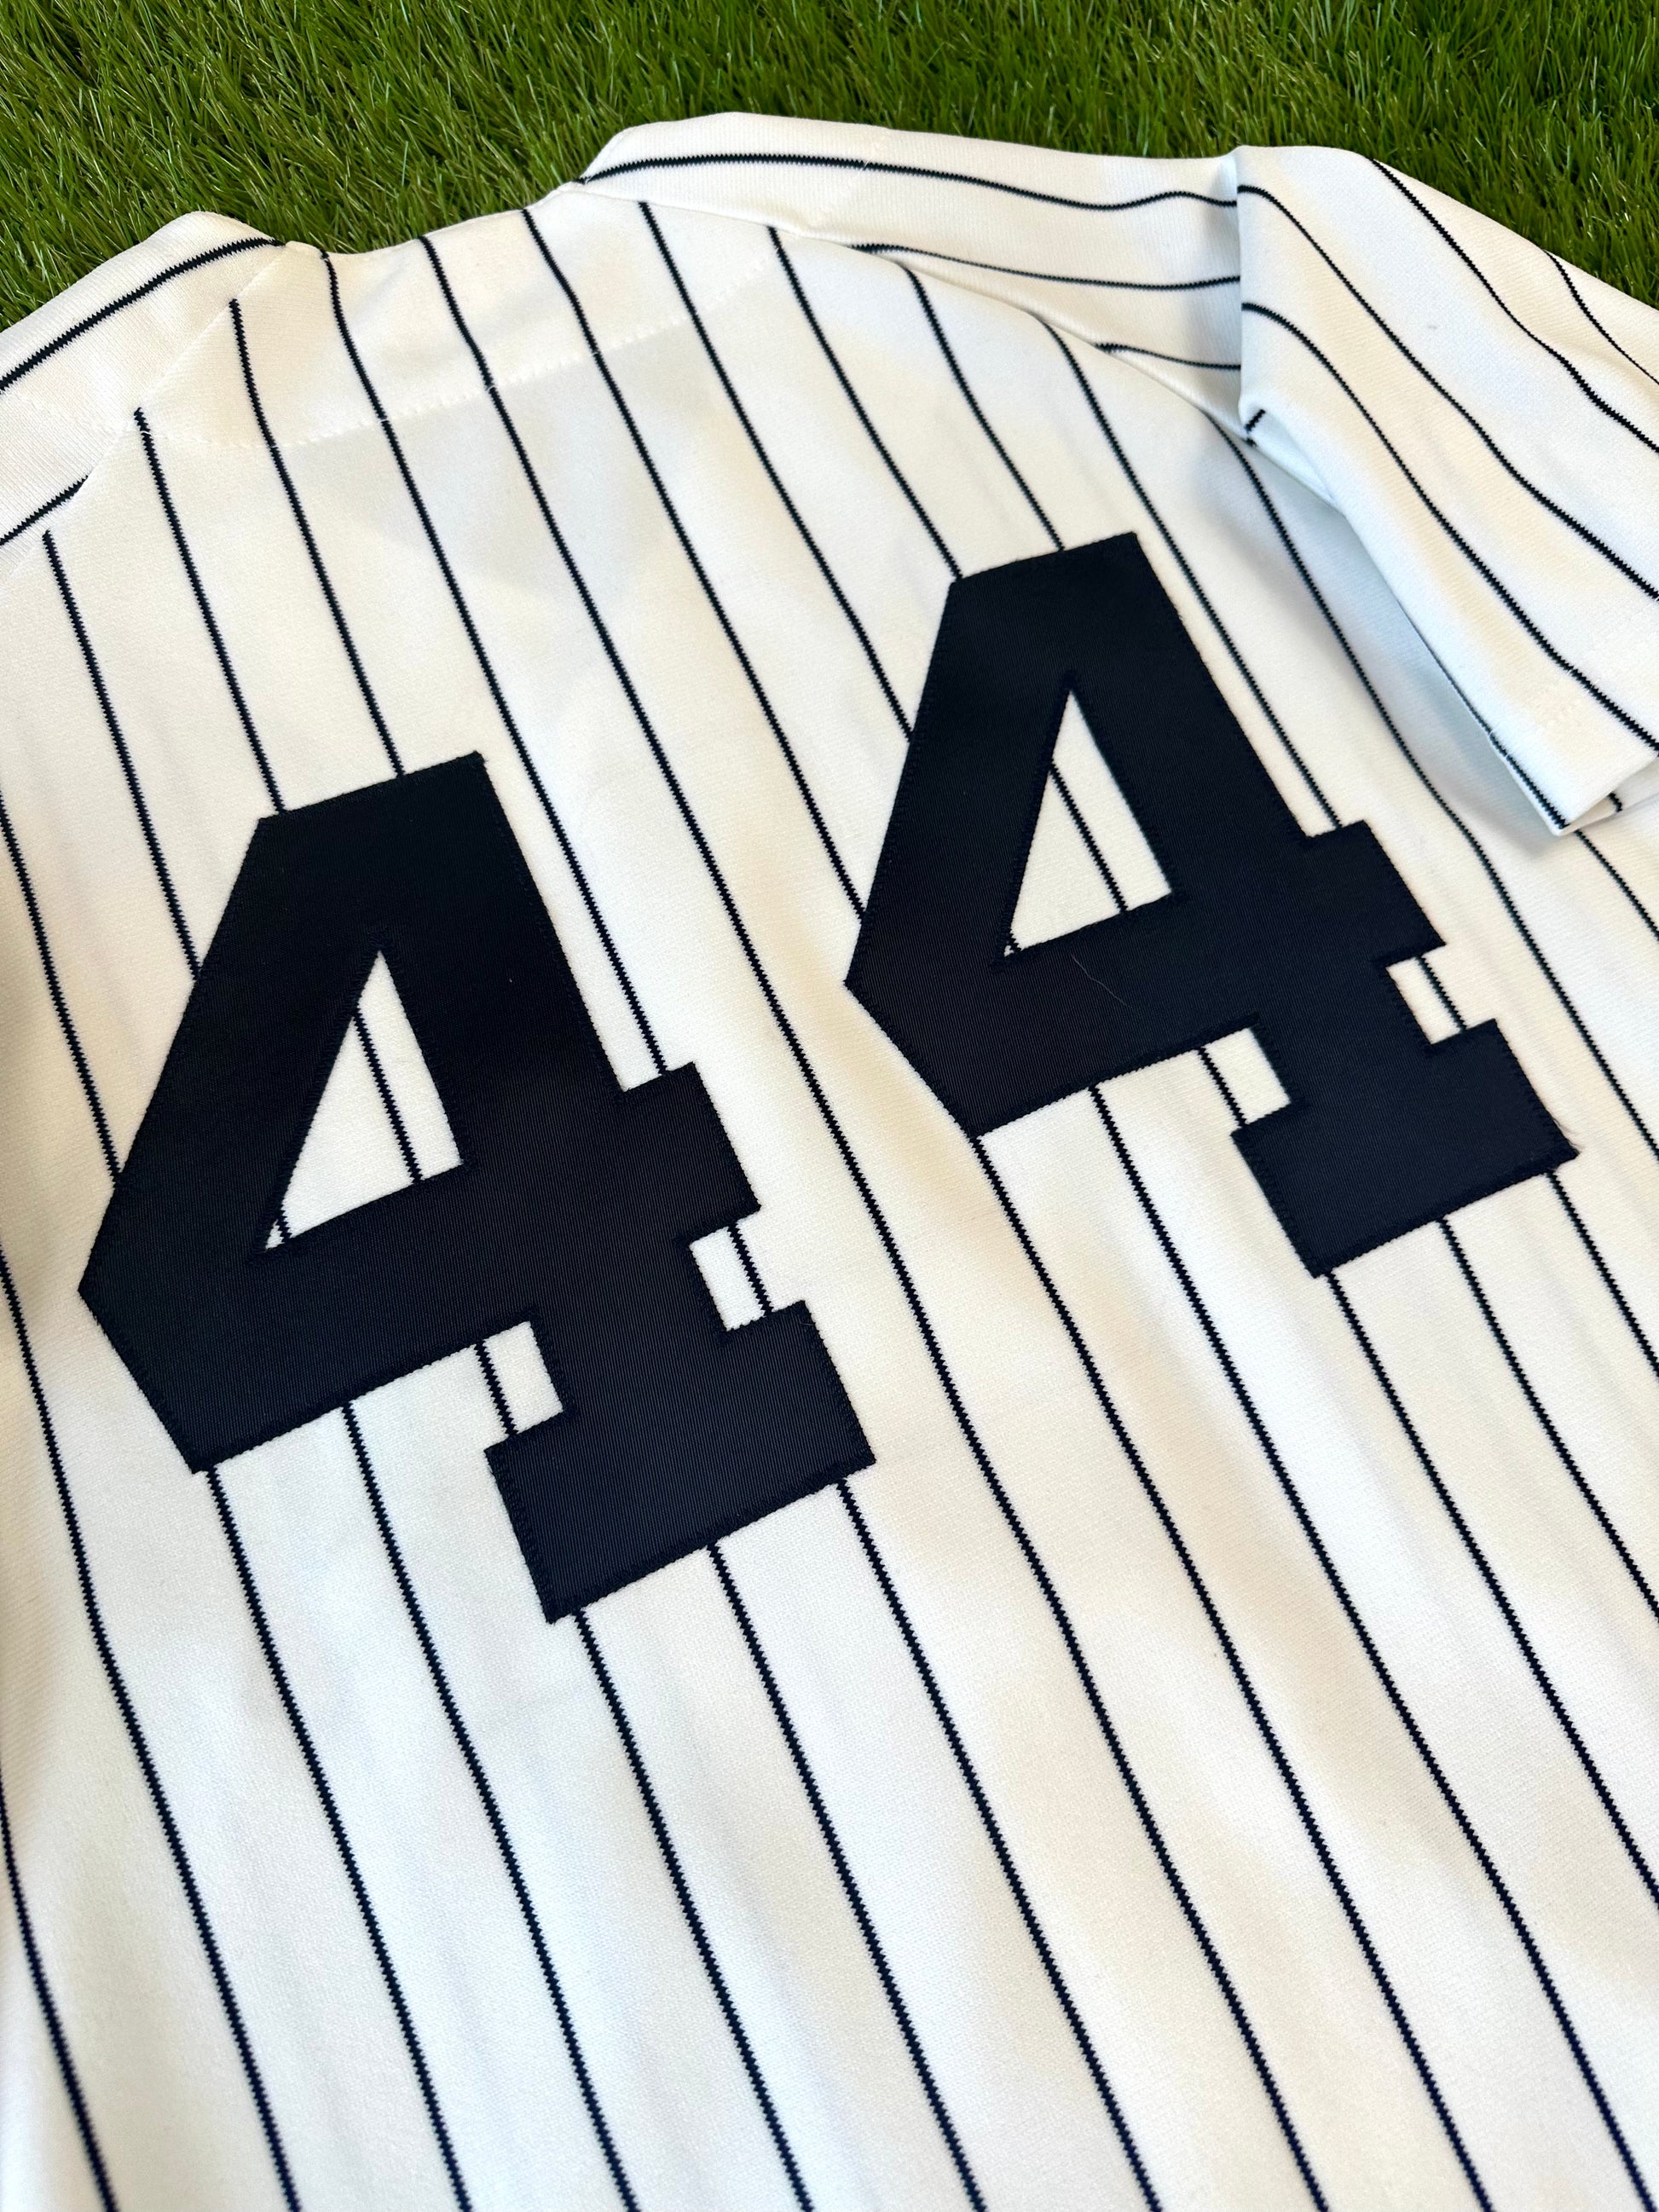 REGGIE JACKSON New York Yankees 1977 Majestic Throwback Away Baseball Jersey  - Custom Throwback Jerseys